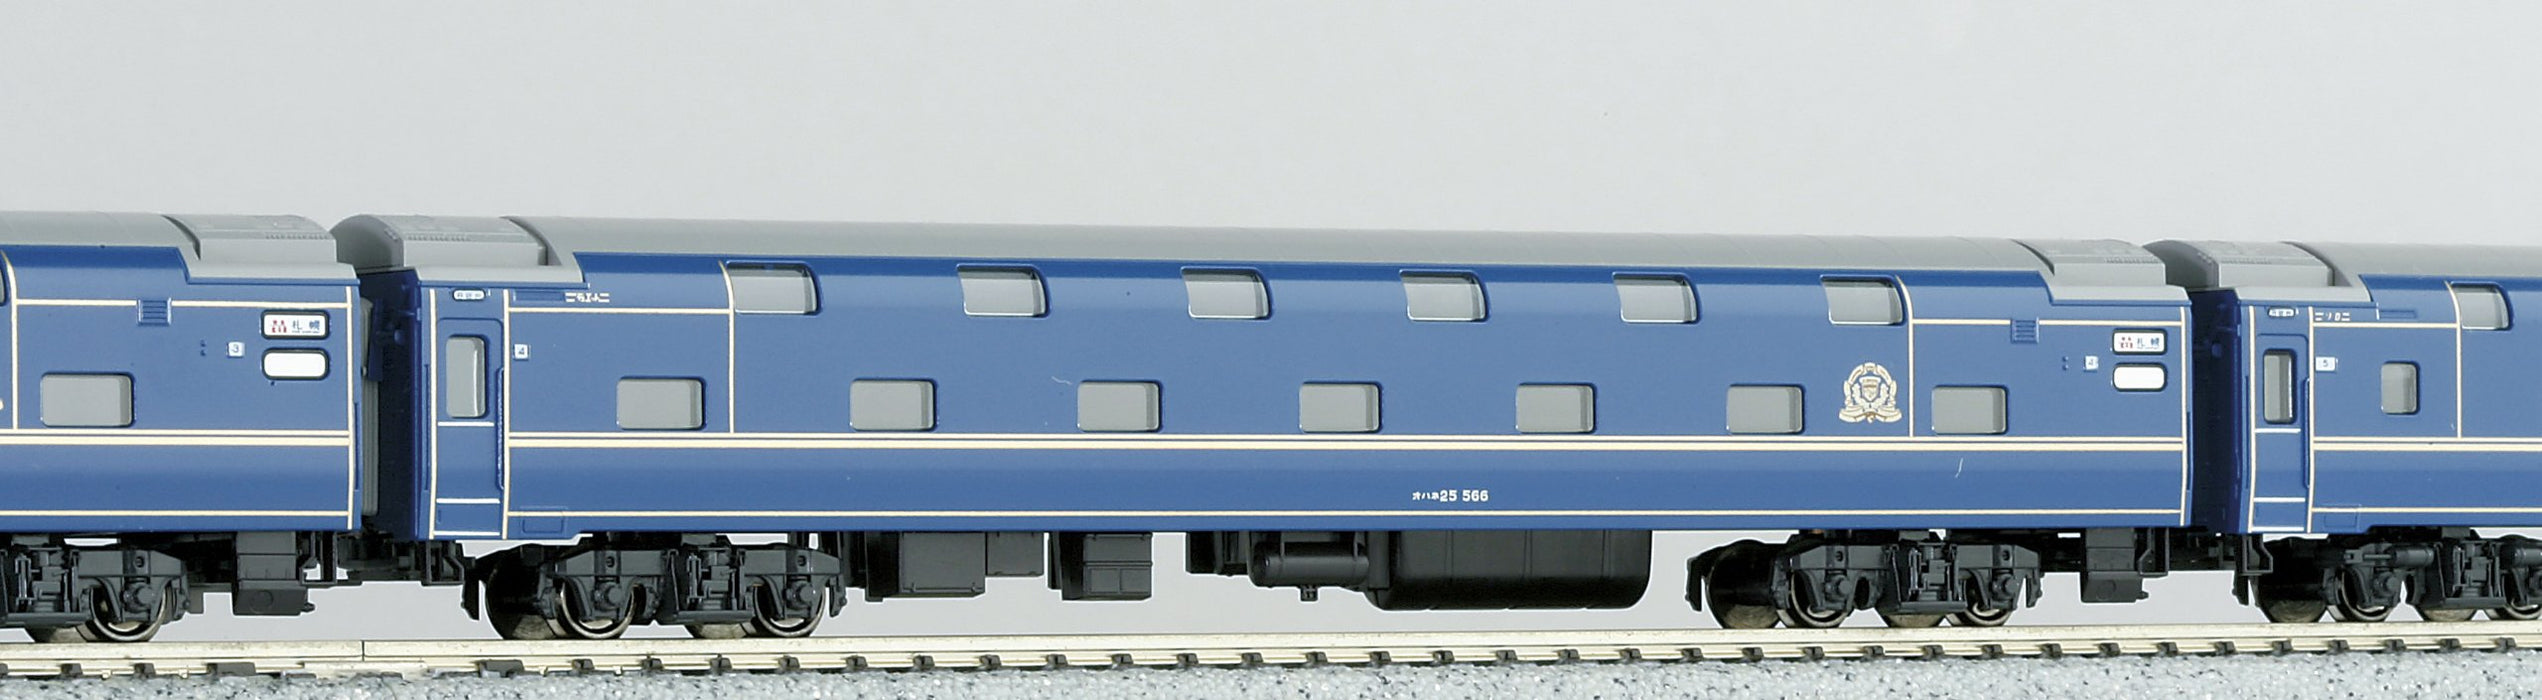 Kato N Gauge 24 Series Basic 6-Car Set - Express Sleeper Hokutosei Dx 10-831 Railway Model